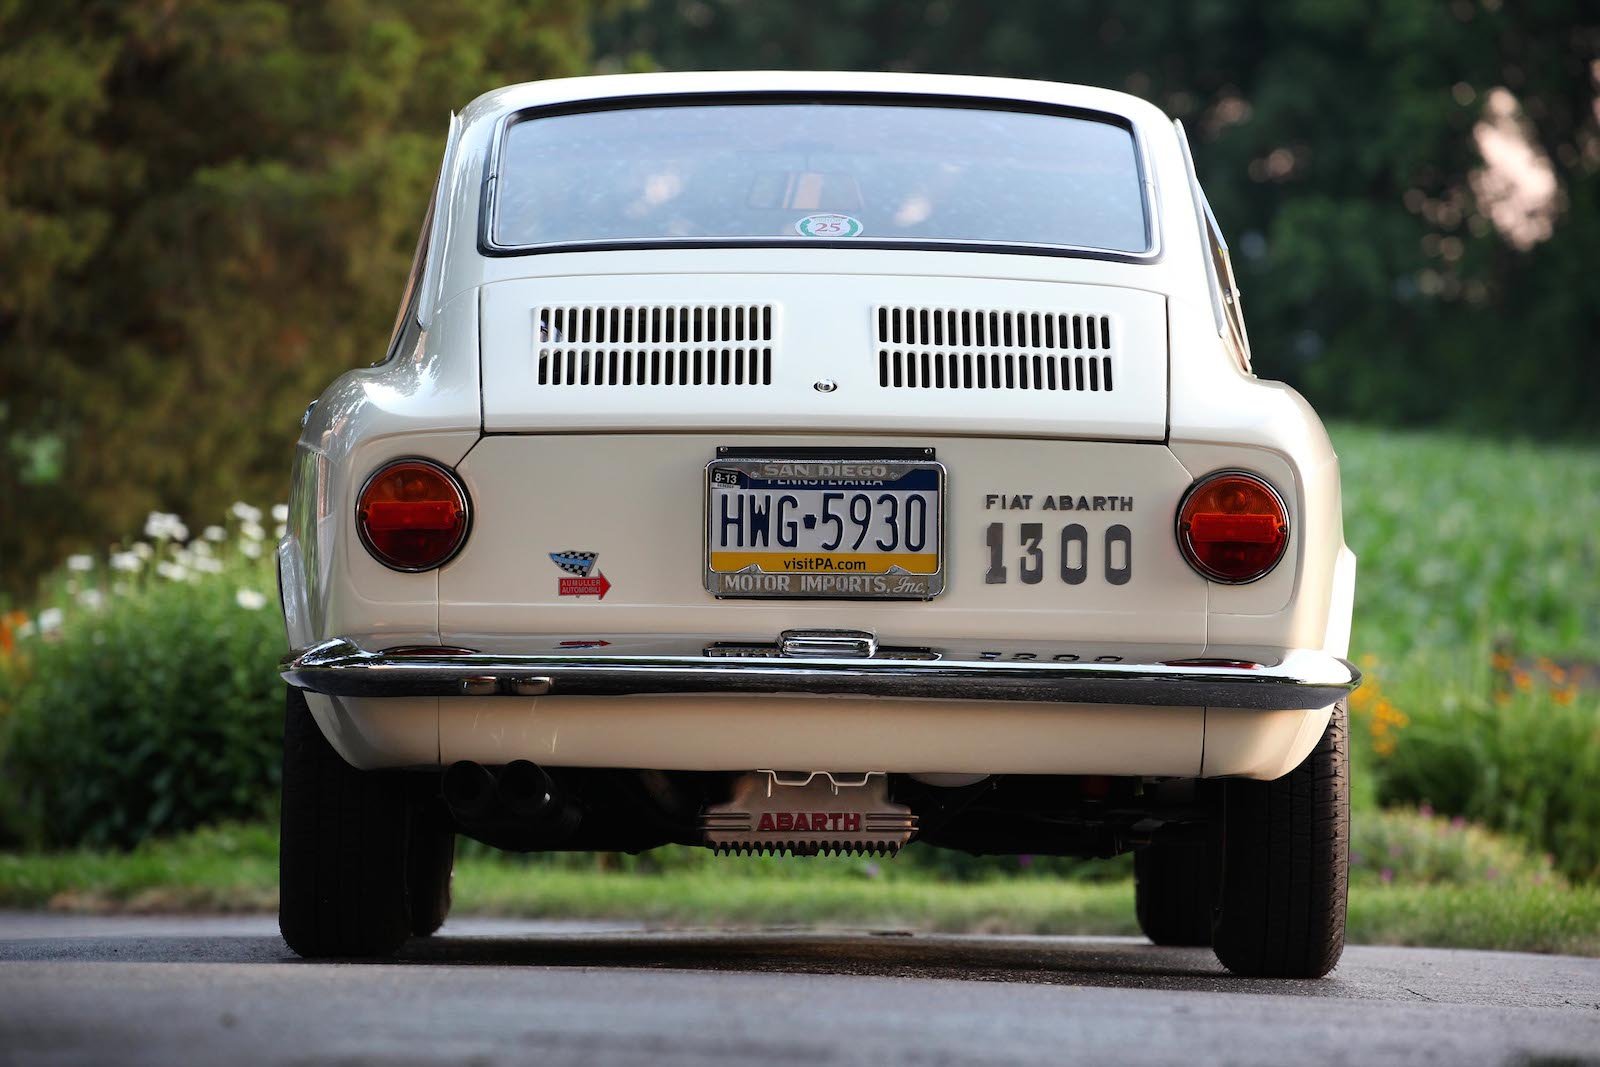 1300, Cars, Classic, Fiat, Italia, Italie, Abarth, Coupe Wallpaper